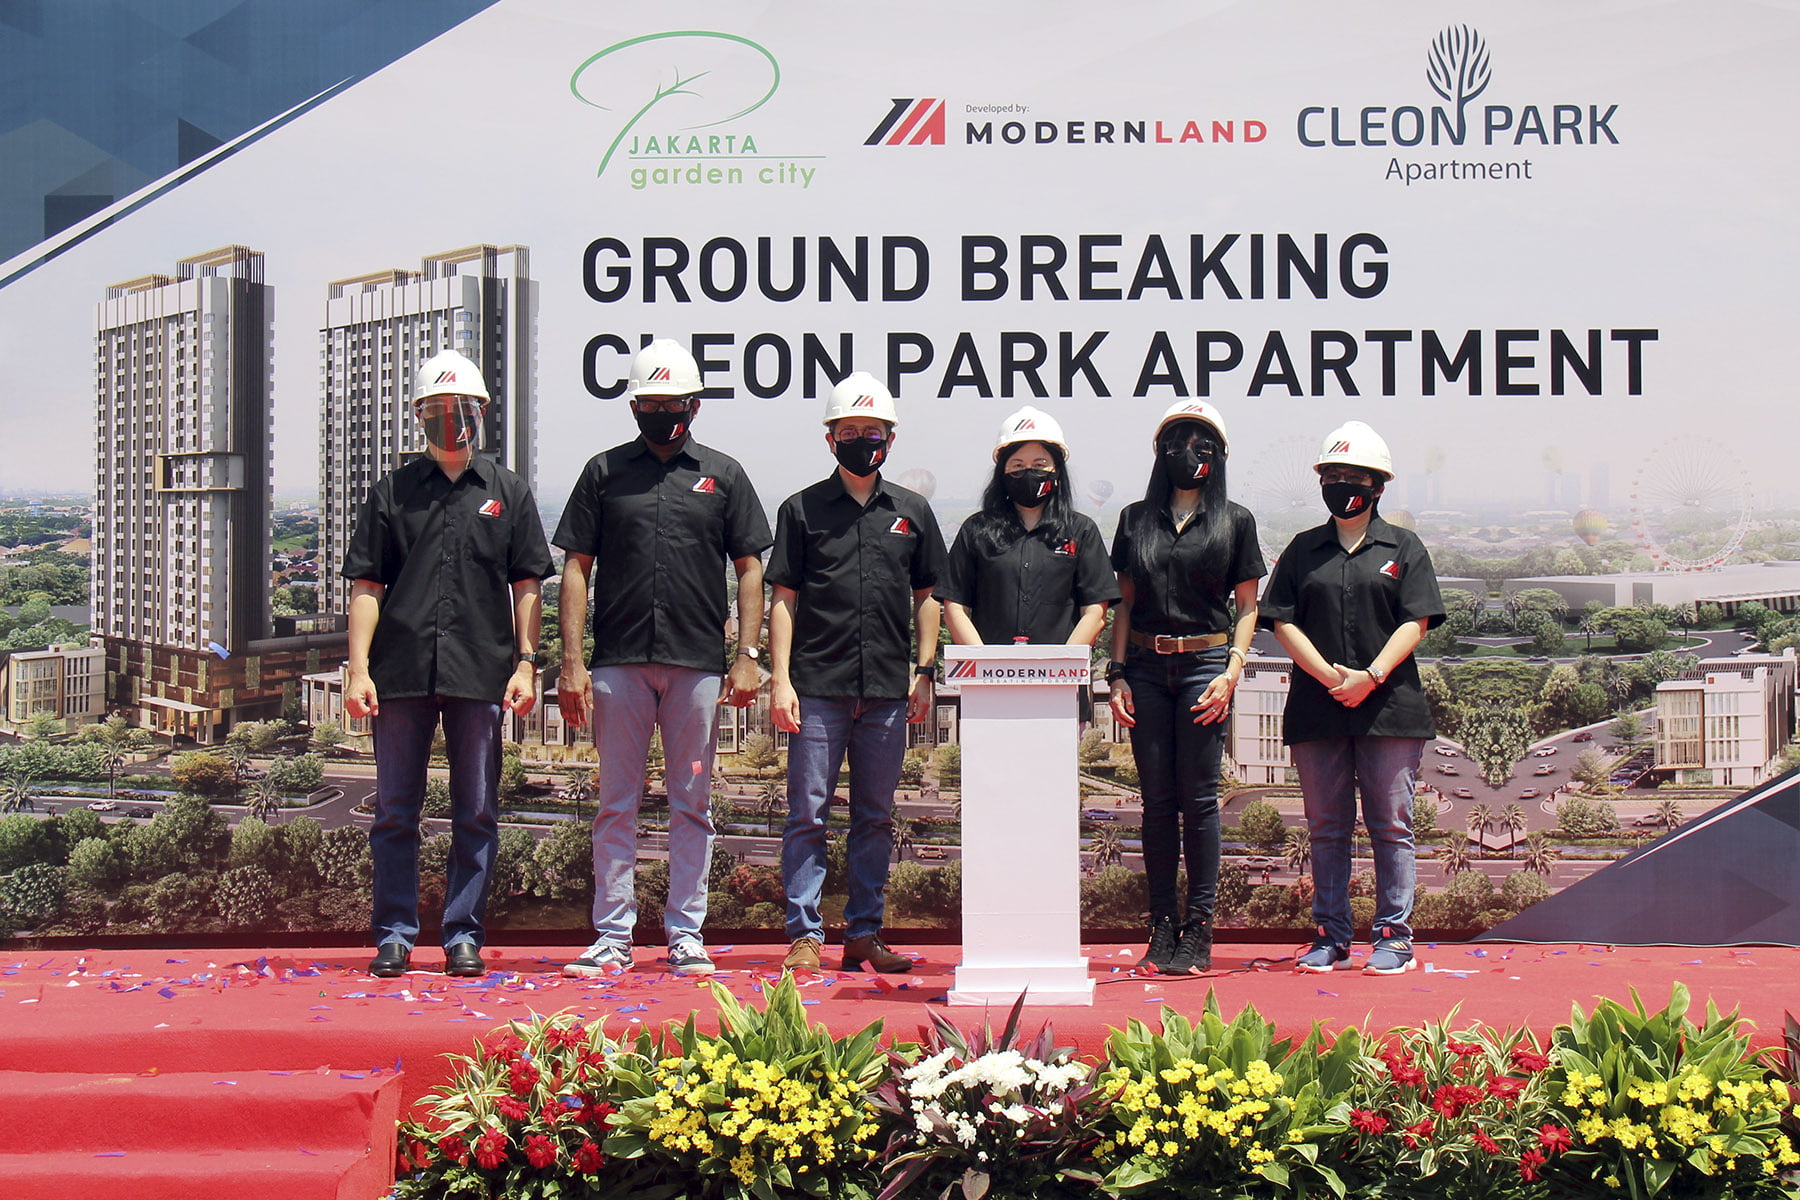 Apartemen Pertama Di Jakarta Garden City Cleon Park Mulai Dibangun Property And The City